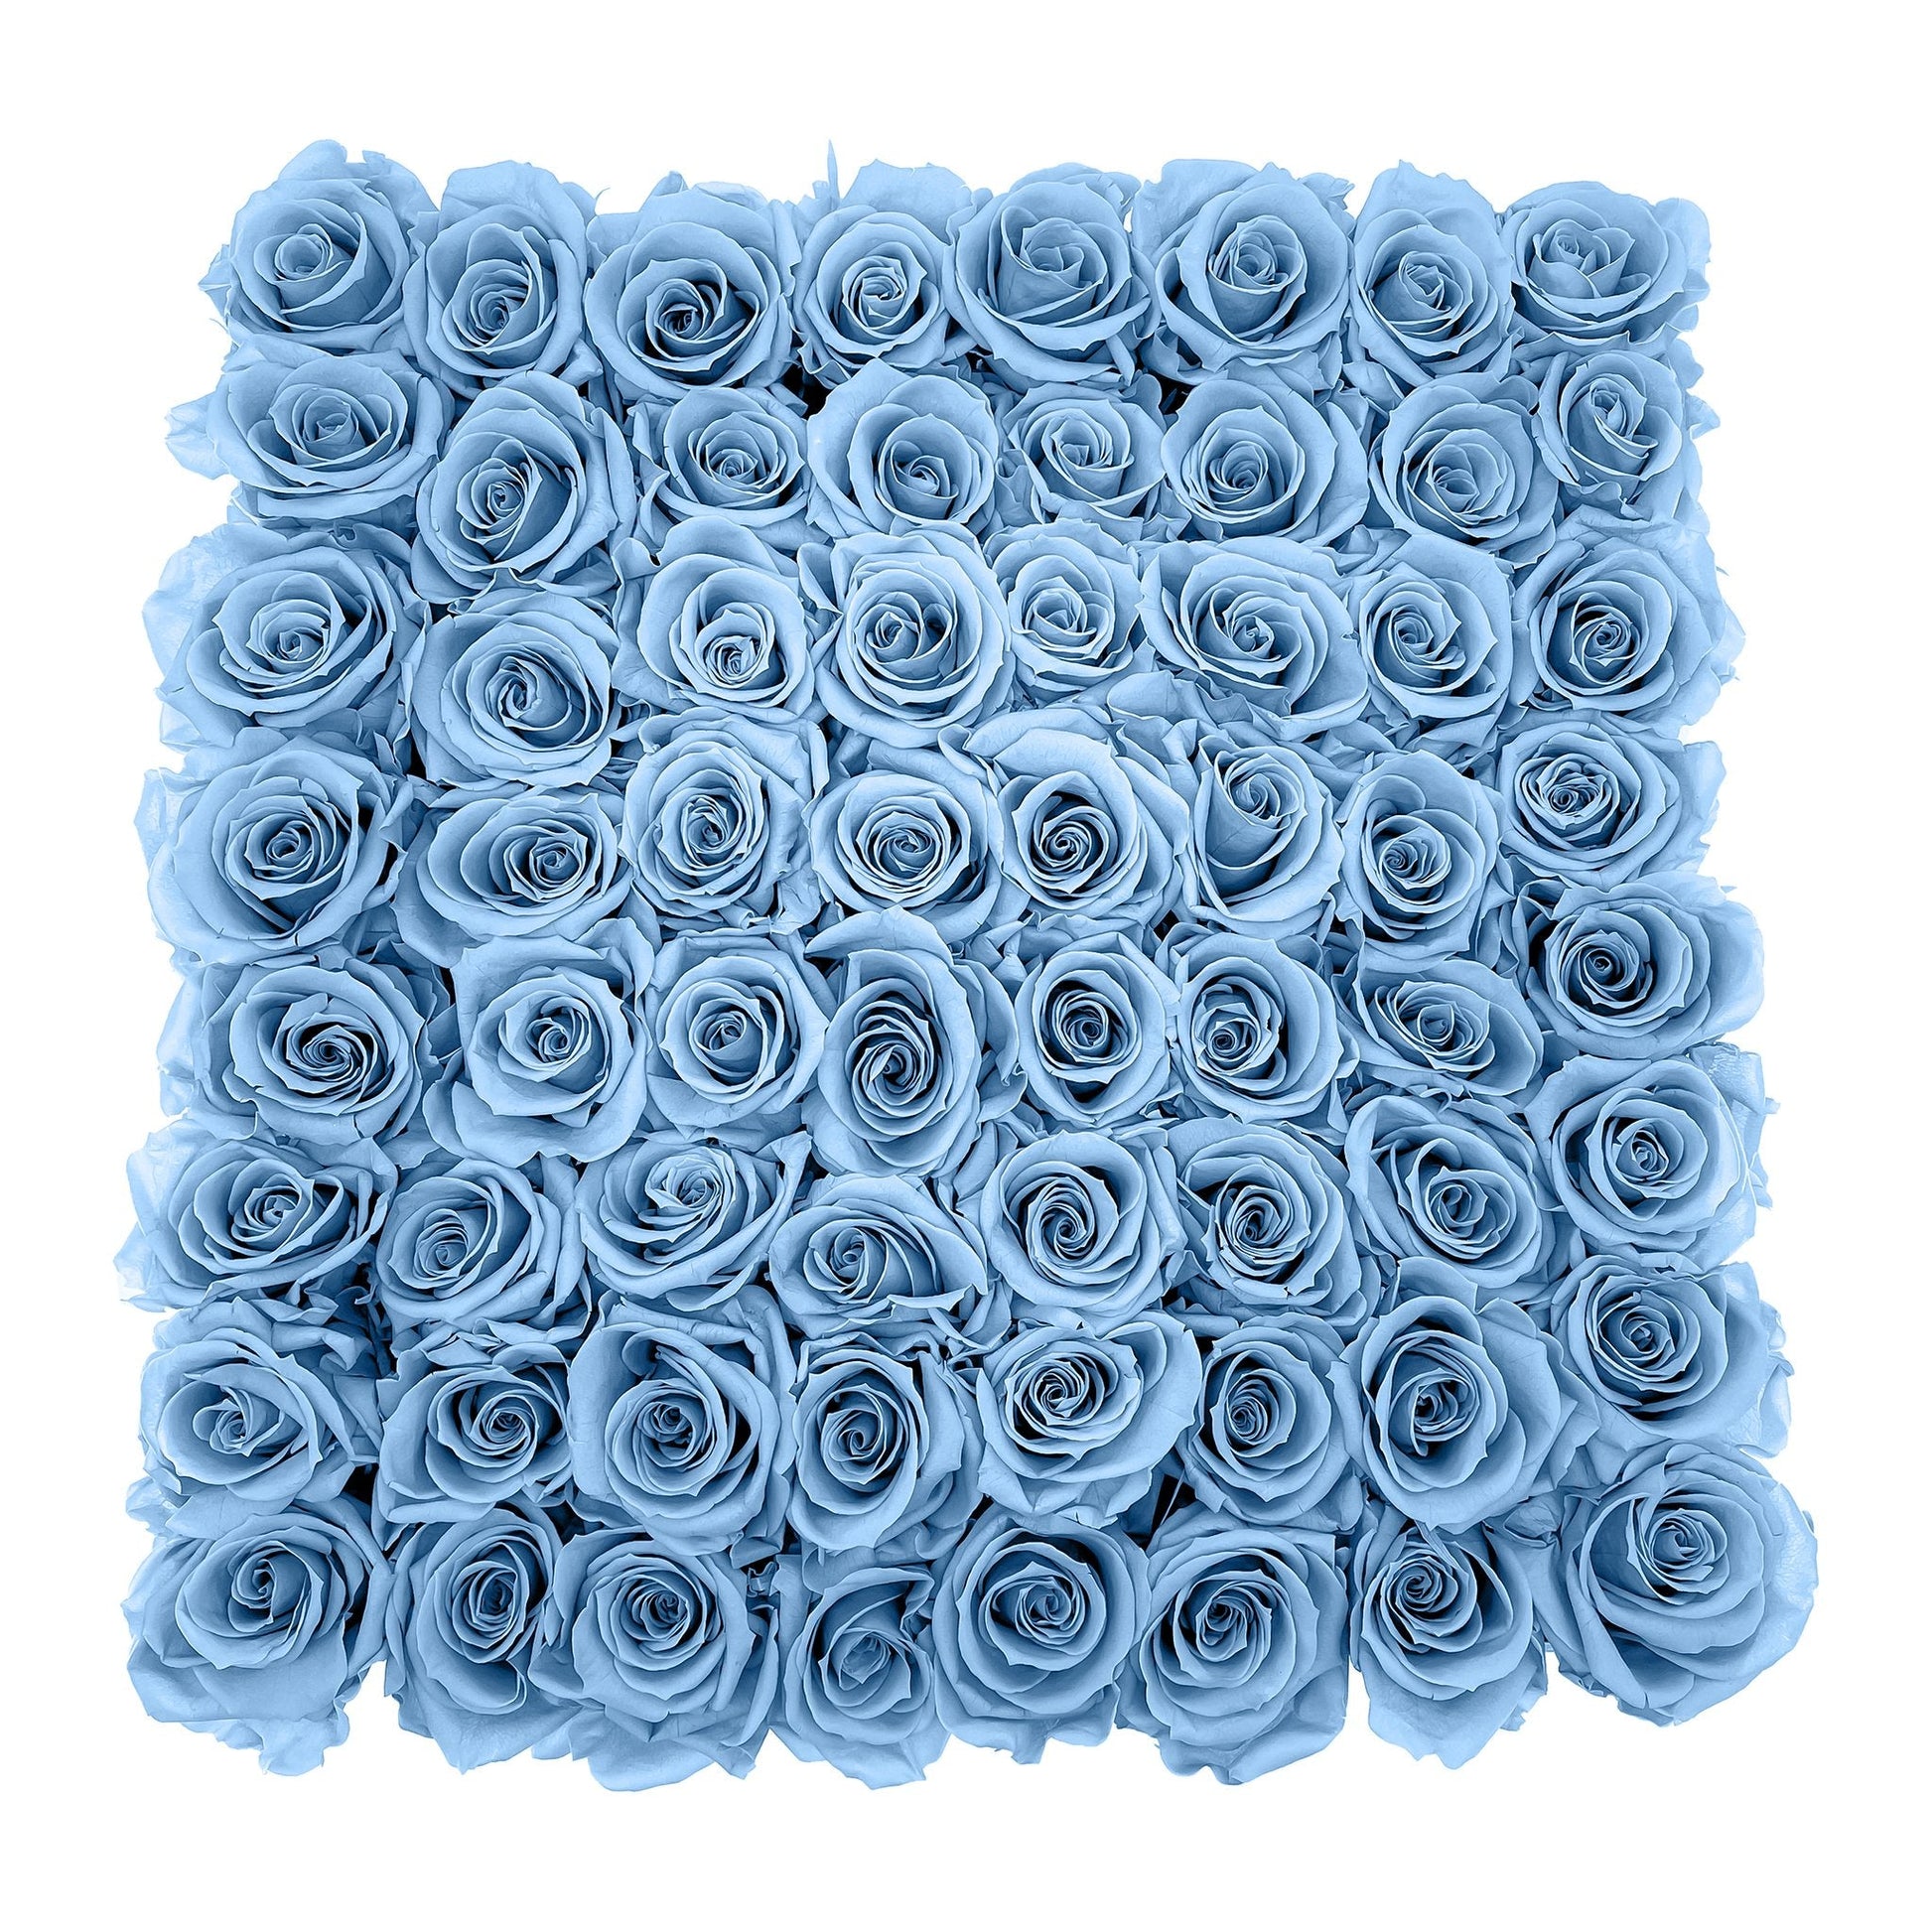 Preserved Roses Large Box | Light Blue - Floral_Arrangement - Flower Delivery NYC